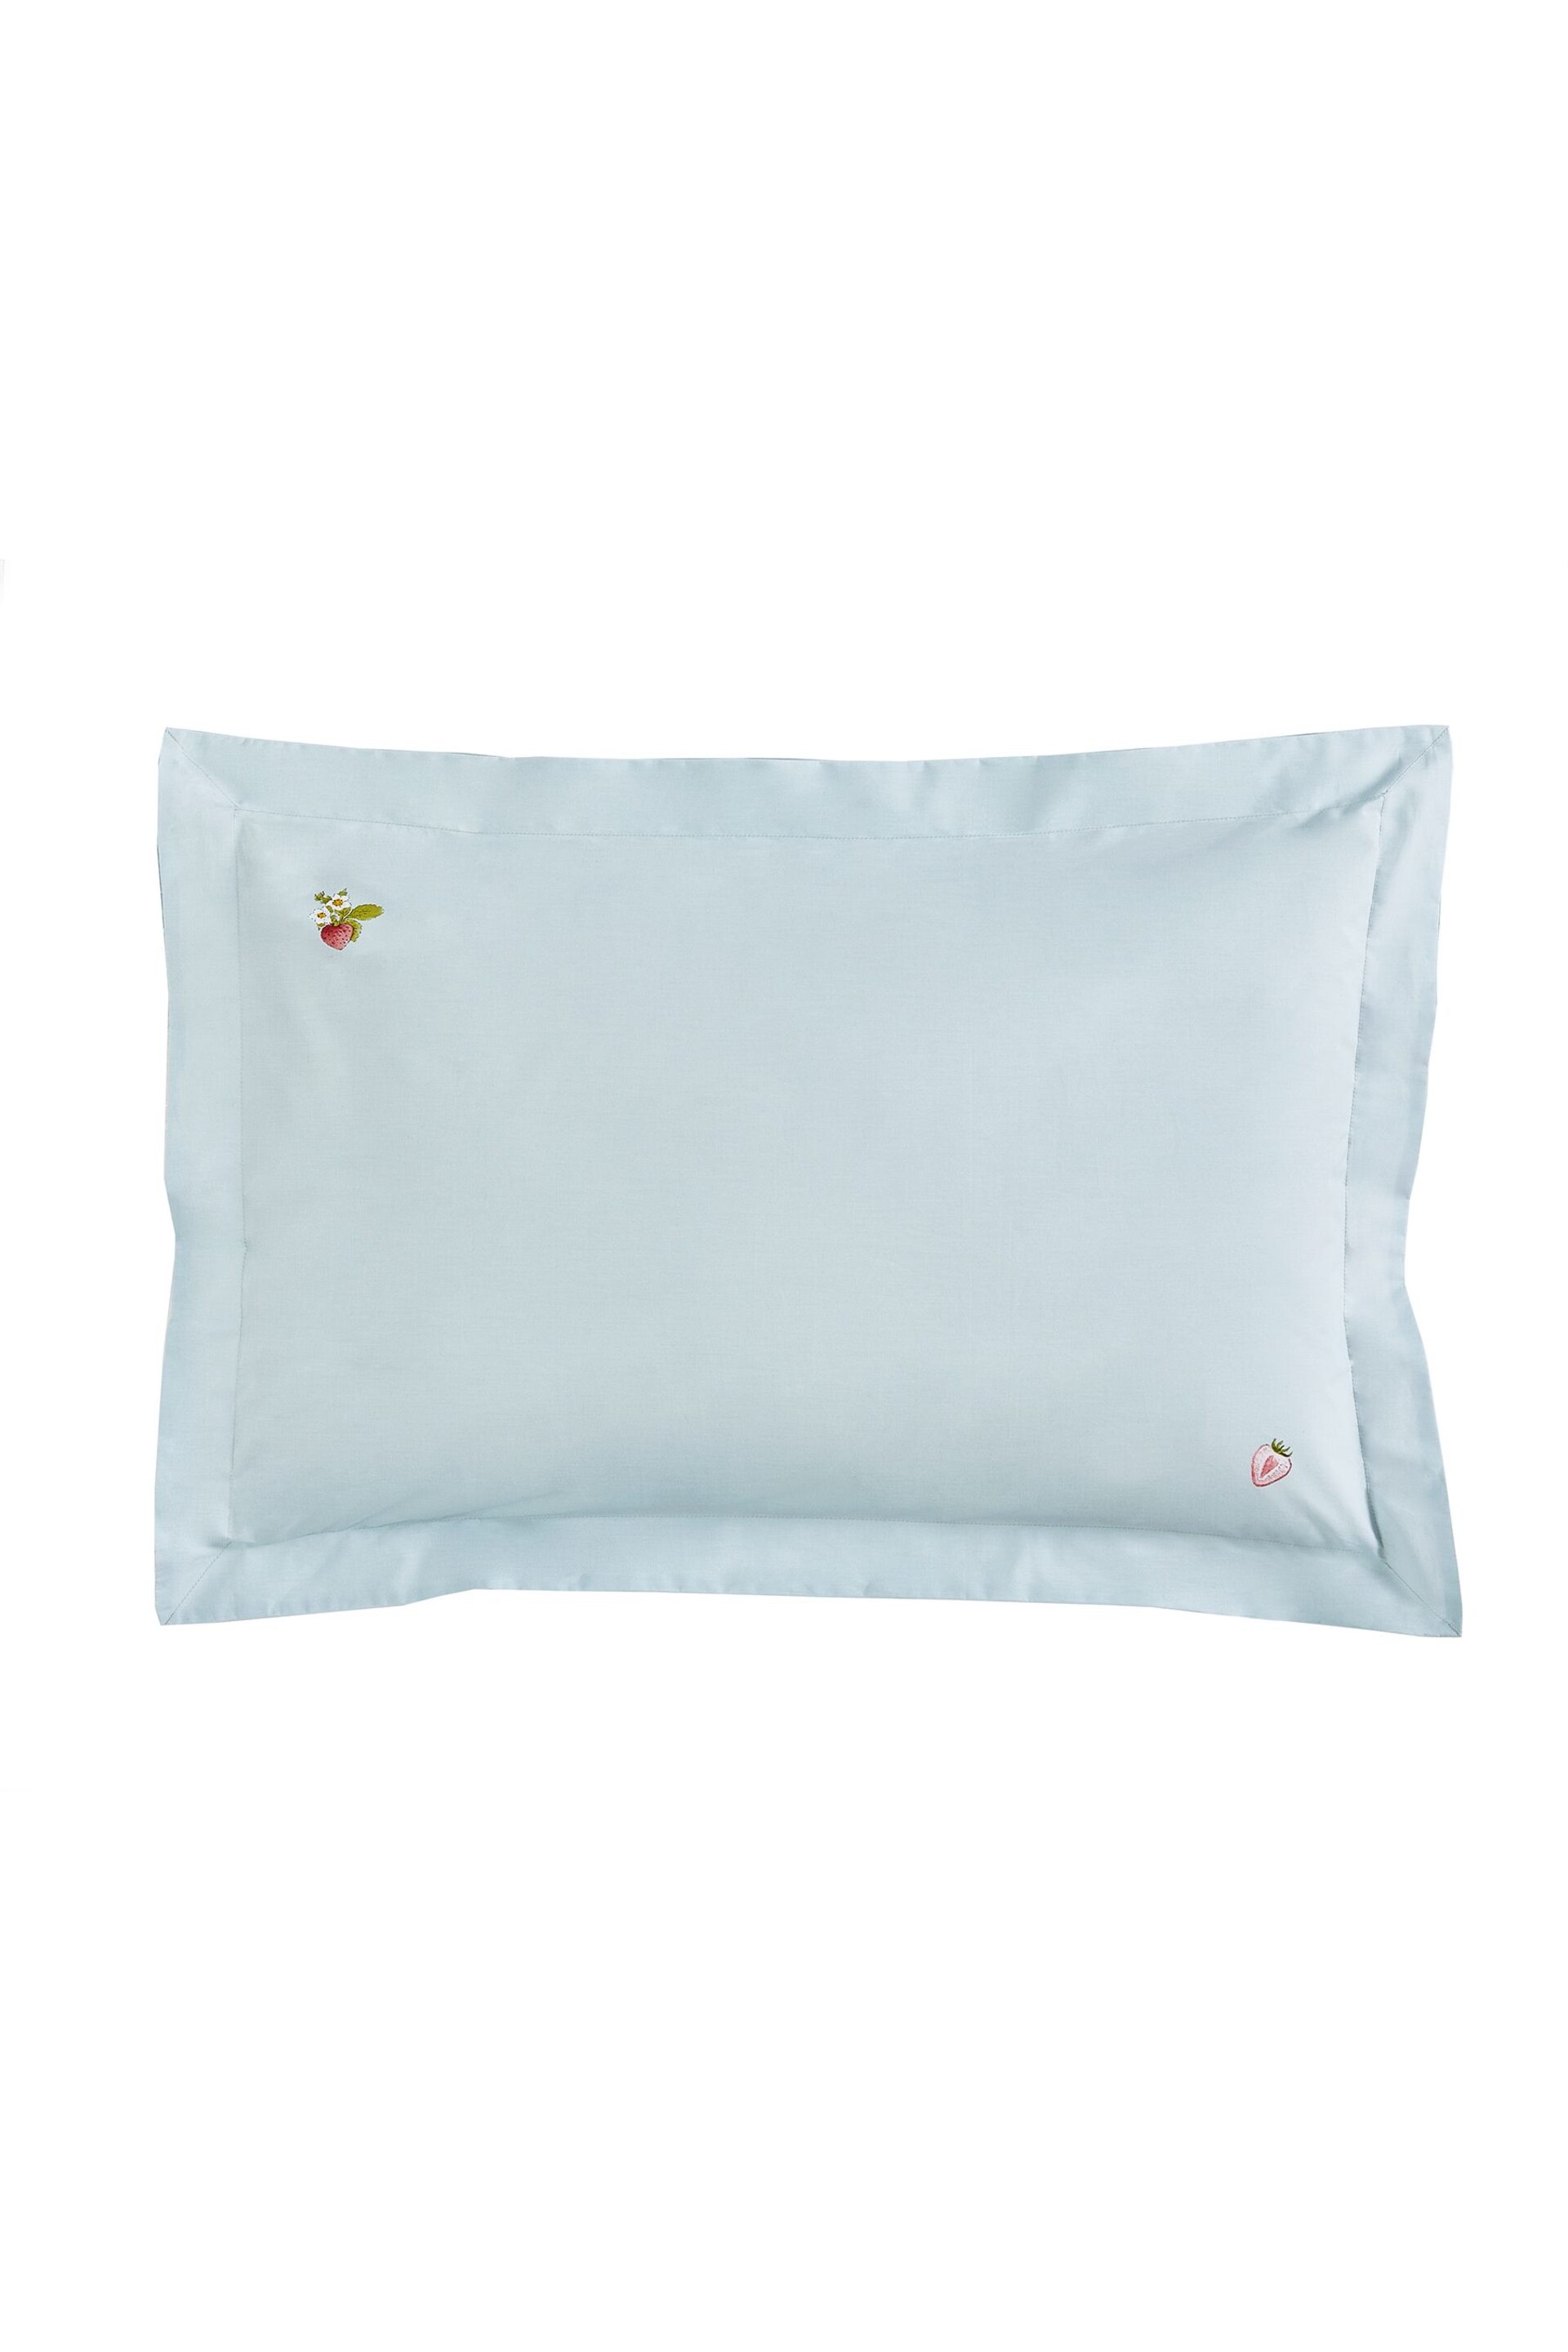 Sophie Allport Blue Strawberries Mist Duvet Cover and Pillowcase Set - Image 4 of 6